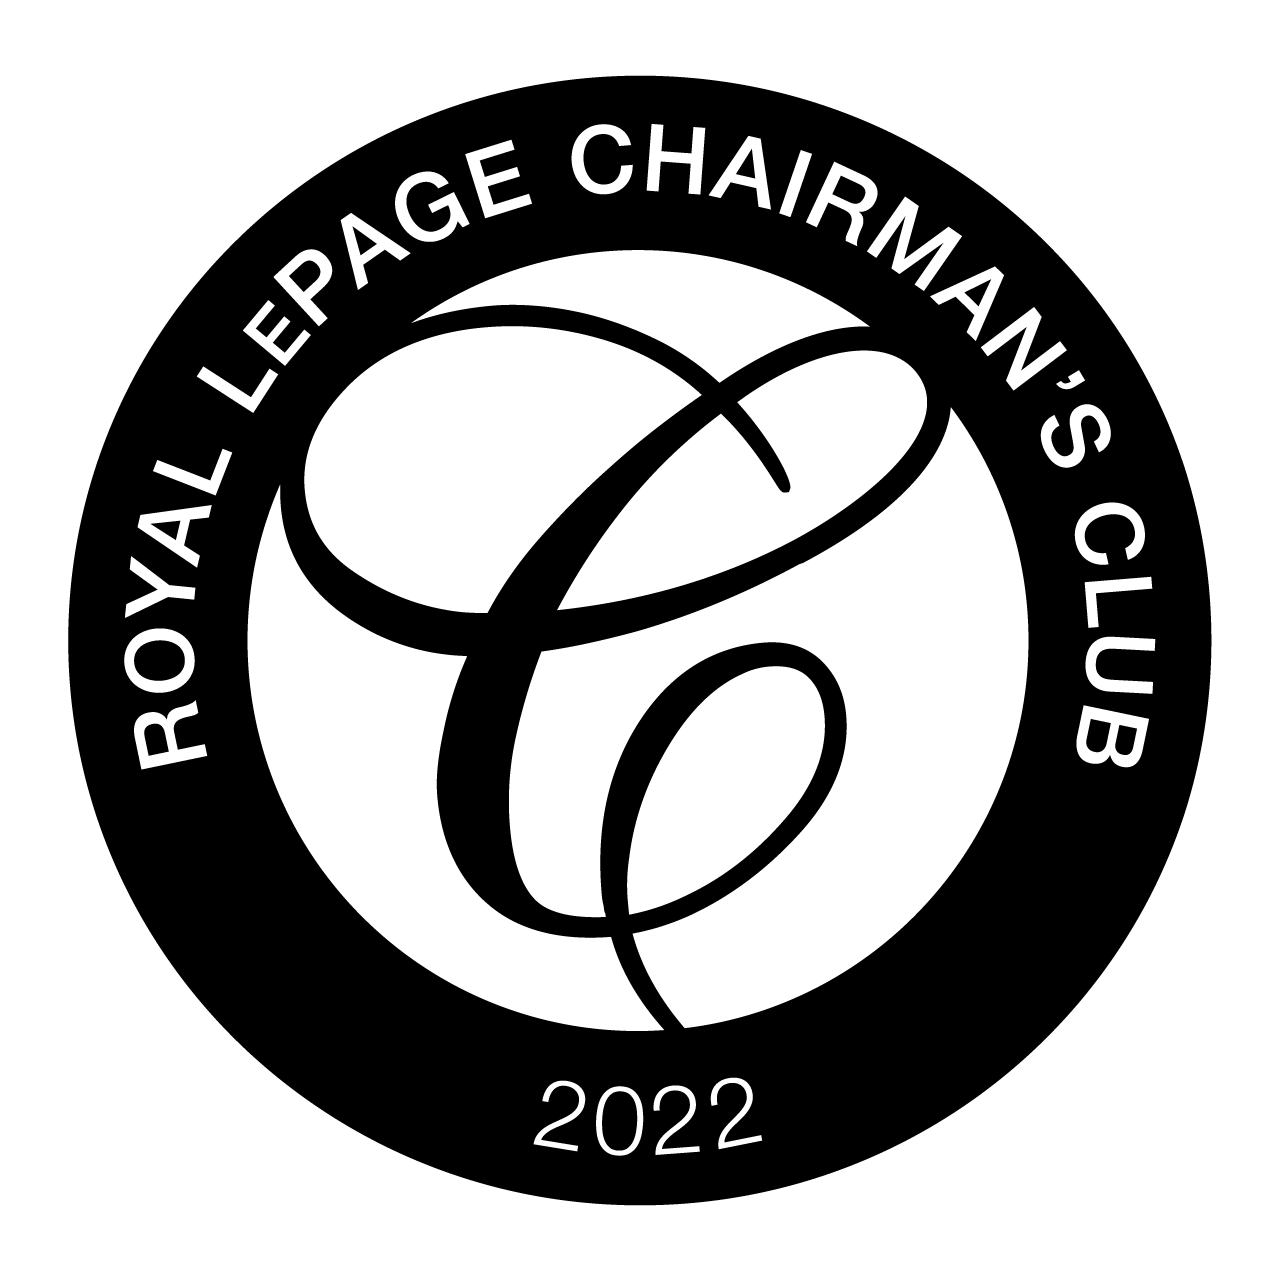 Royal LePage Chairman Club Award